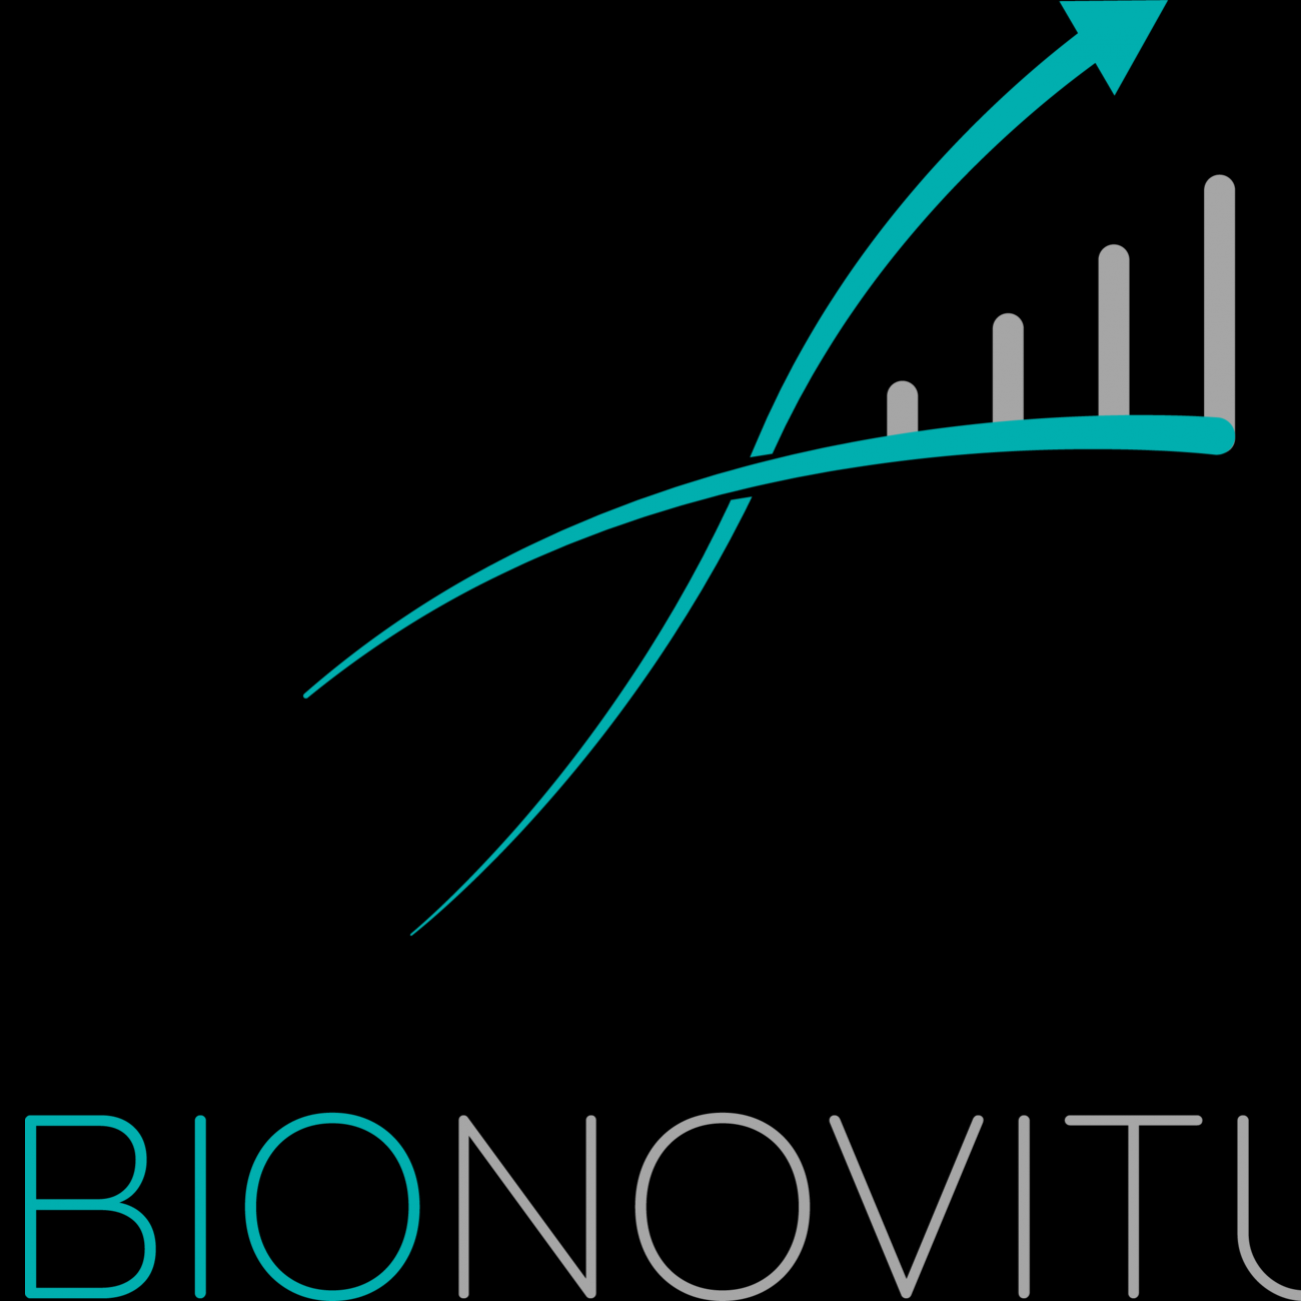 Bionovitus